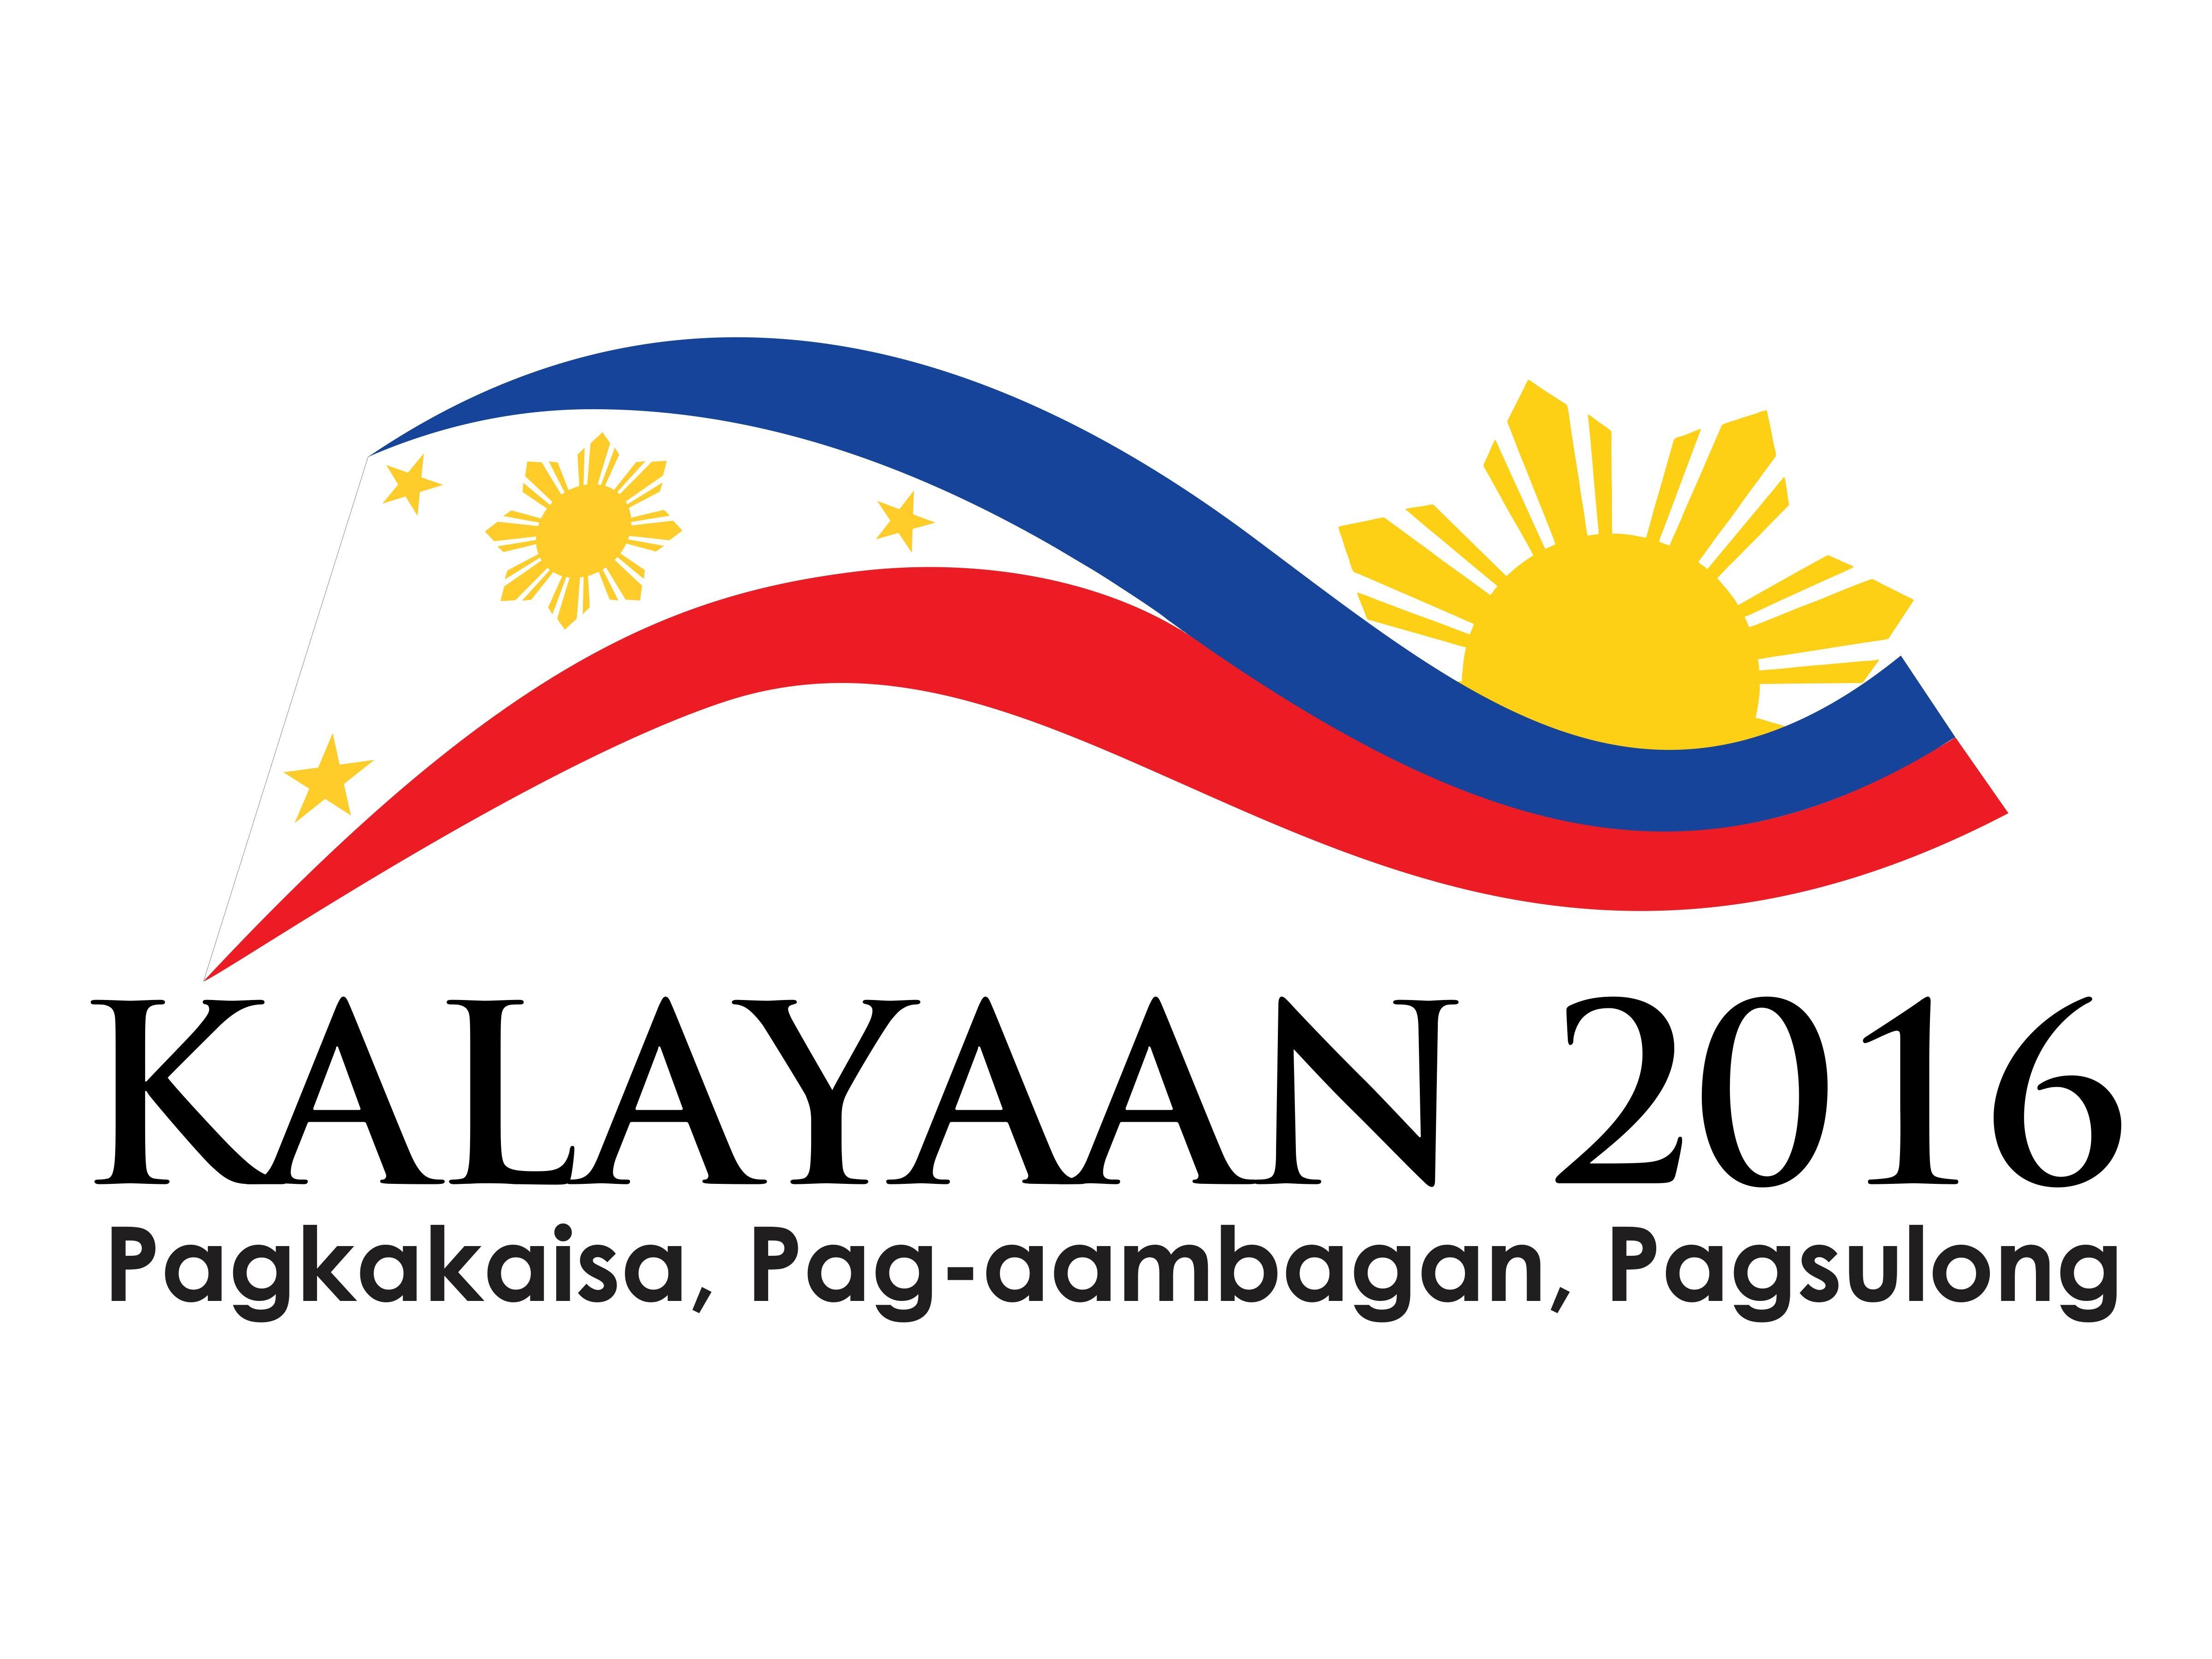 Www.Philippine Logo - Kalayaan 2016 Logo. Philippine Embassy of Canberra Australia